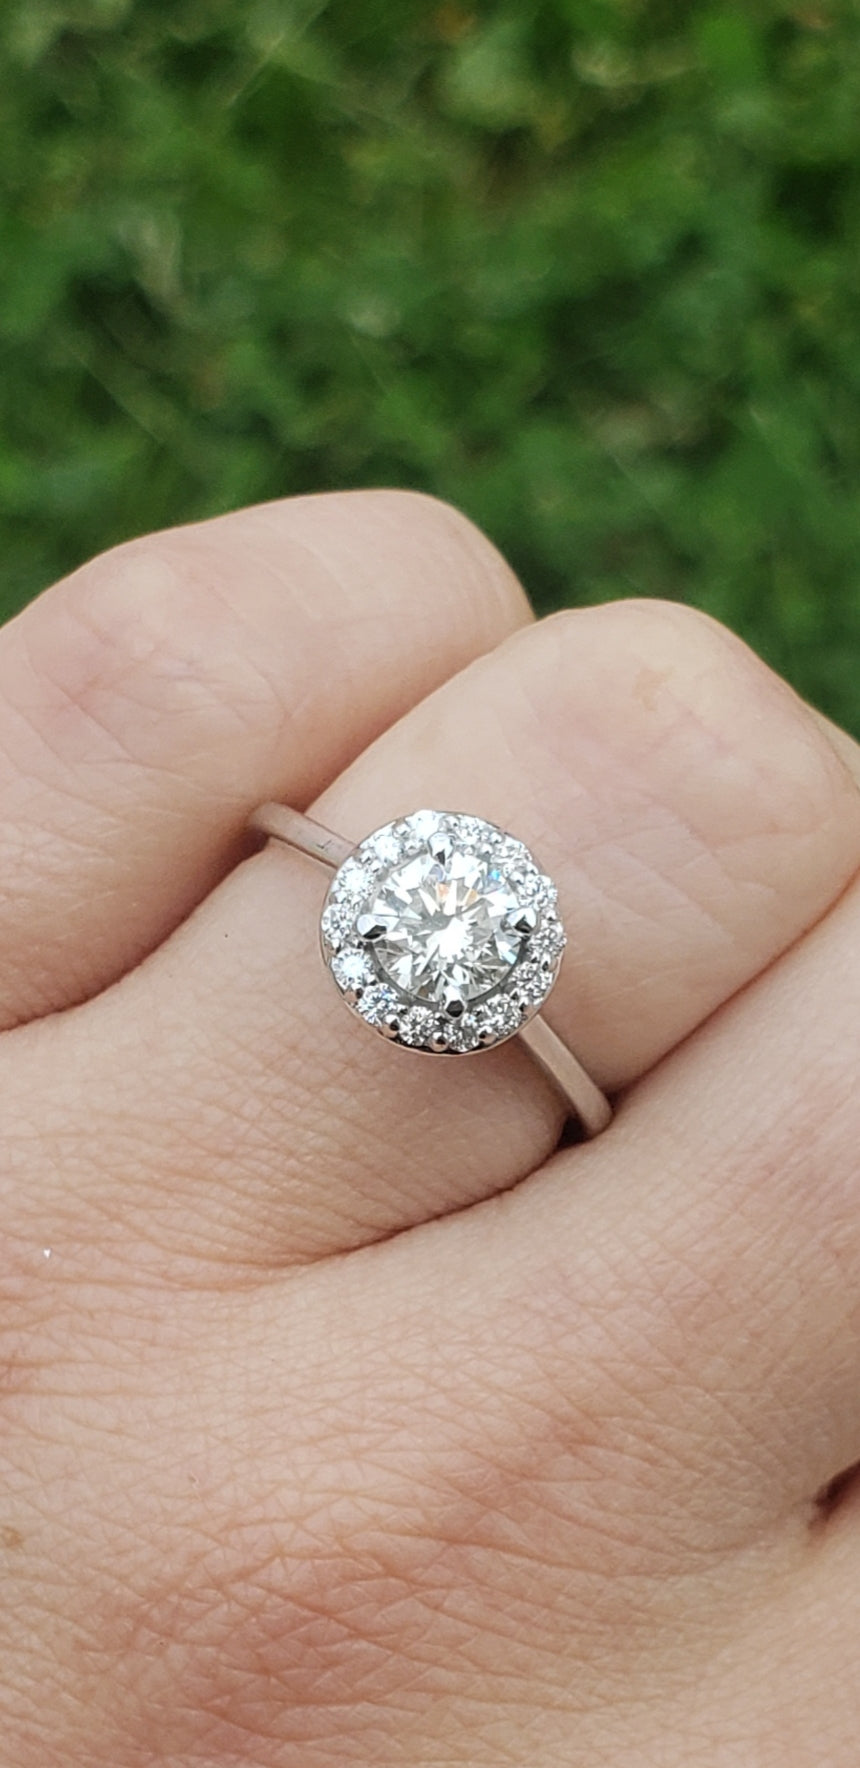 14K White Gold Diamond Engagement Ring with Diamond Halo and Plain Band